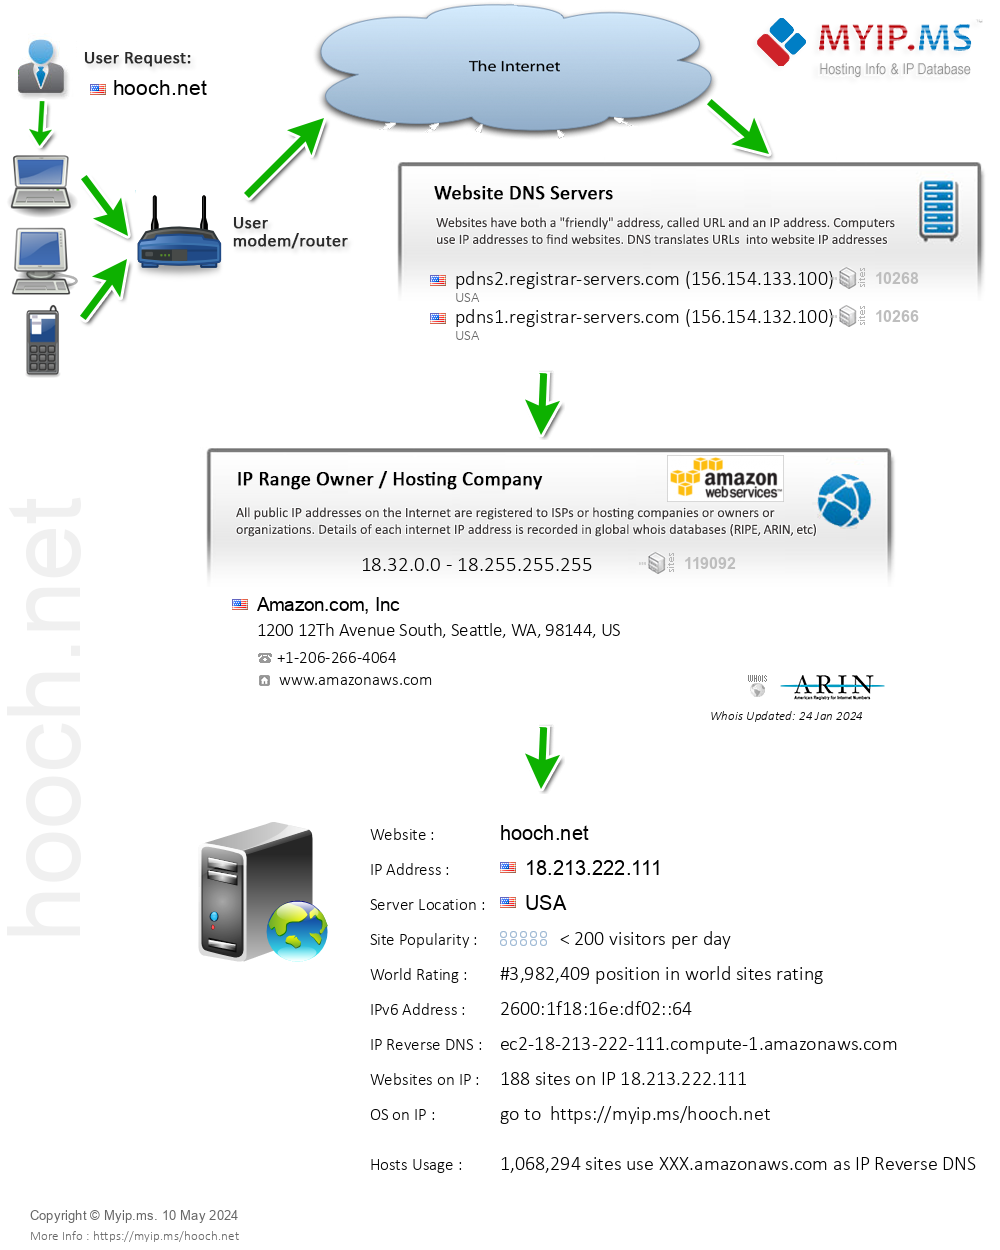 Hooch.net - Website Hosting Visual IP Diagram